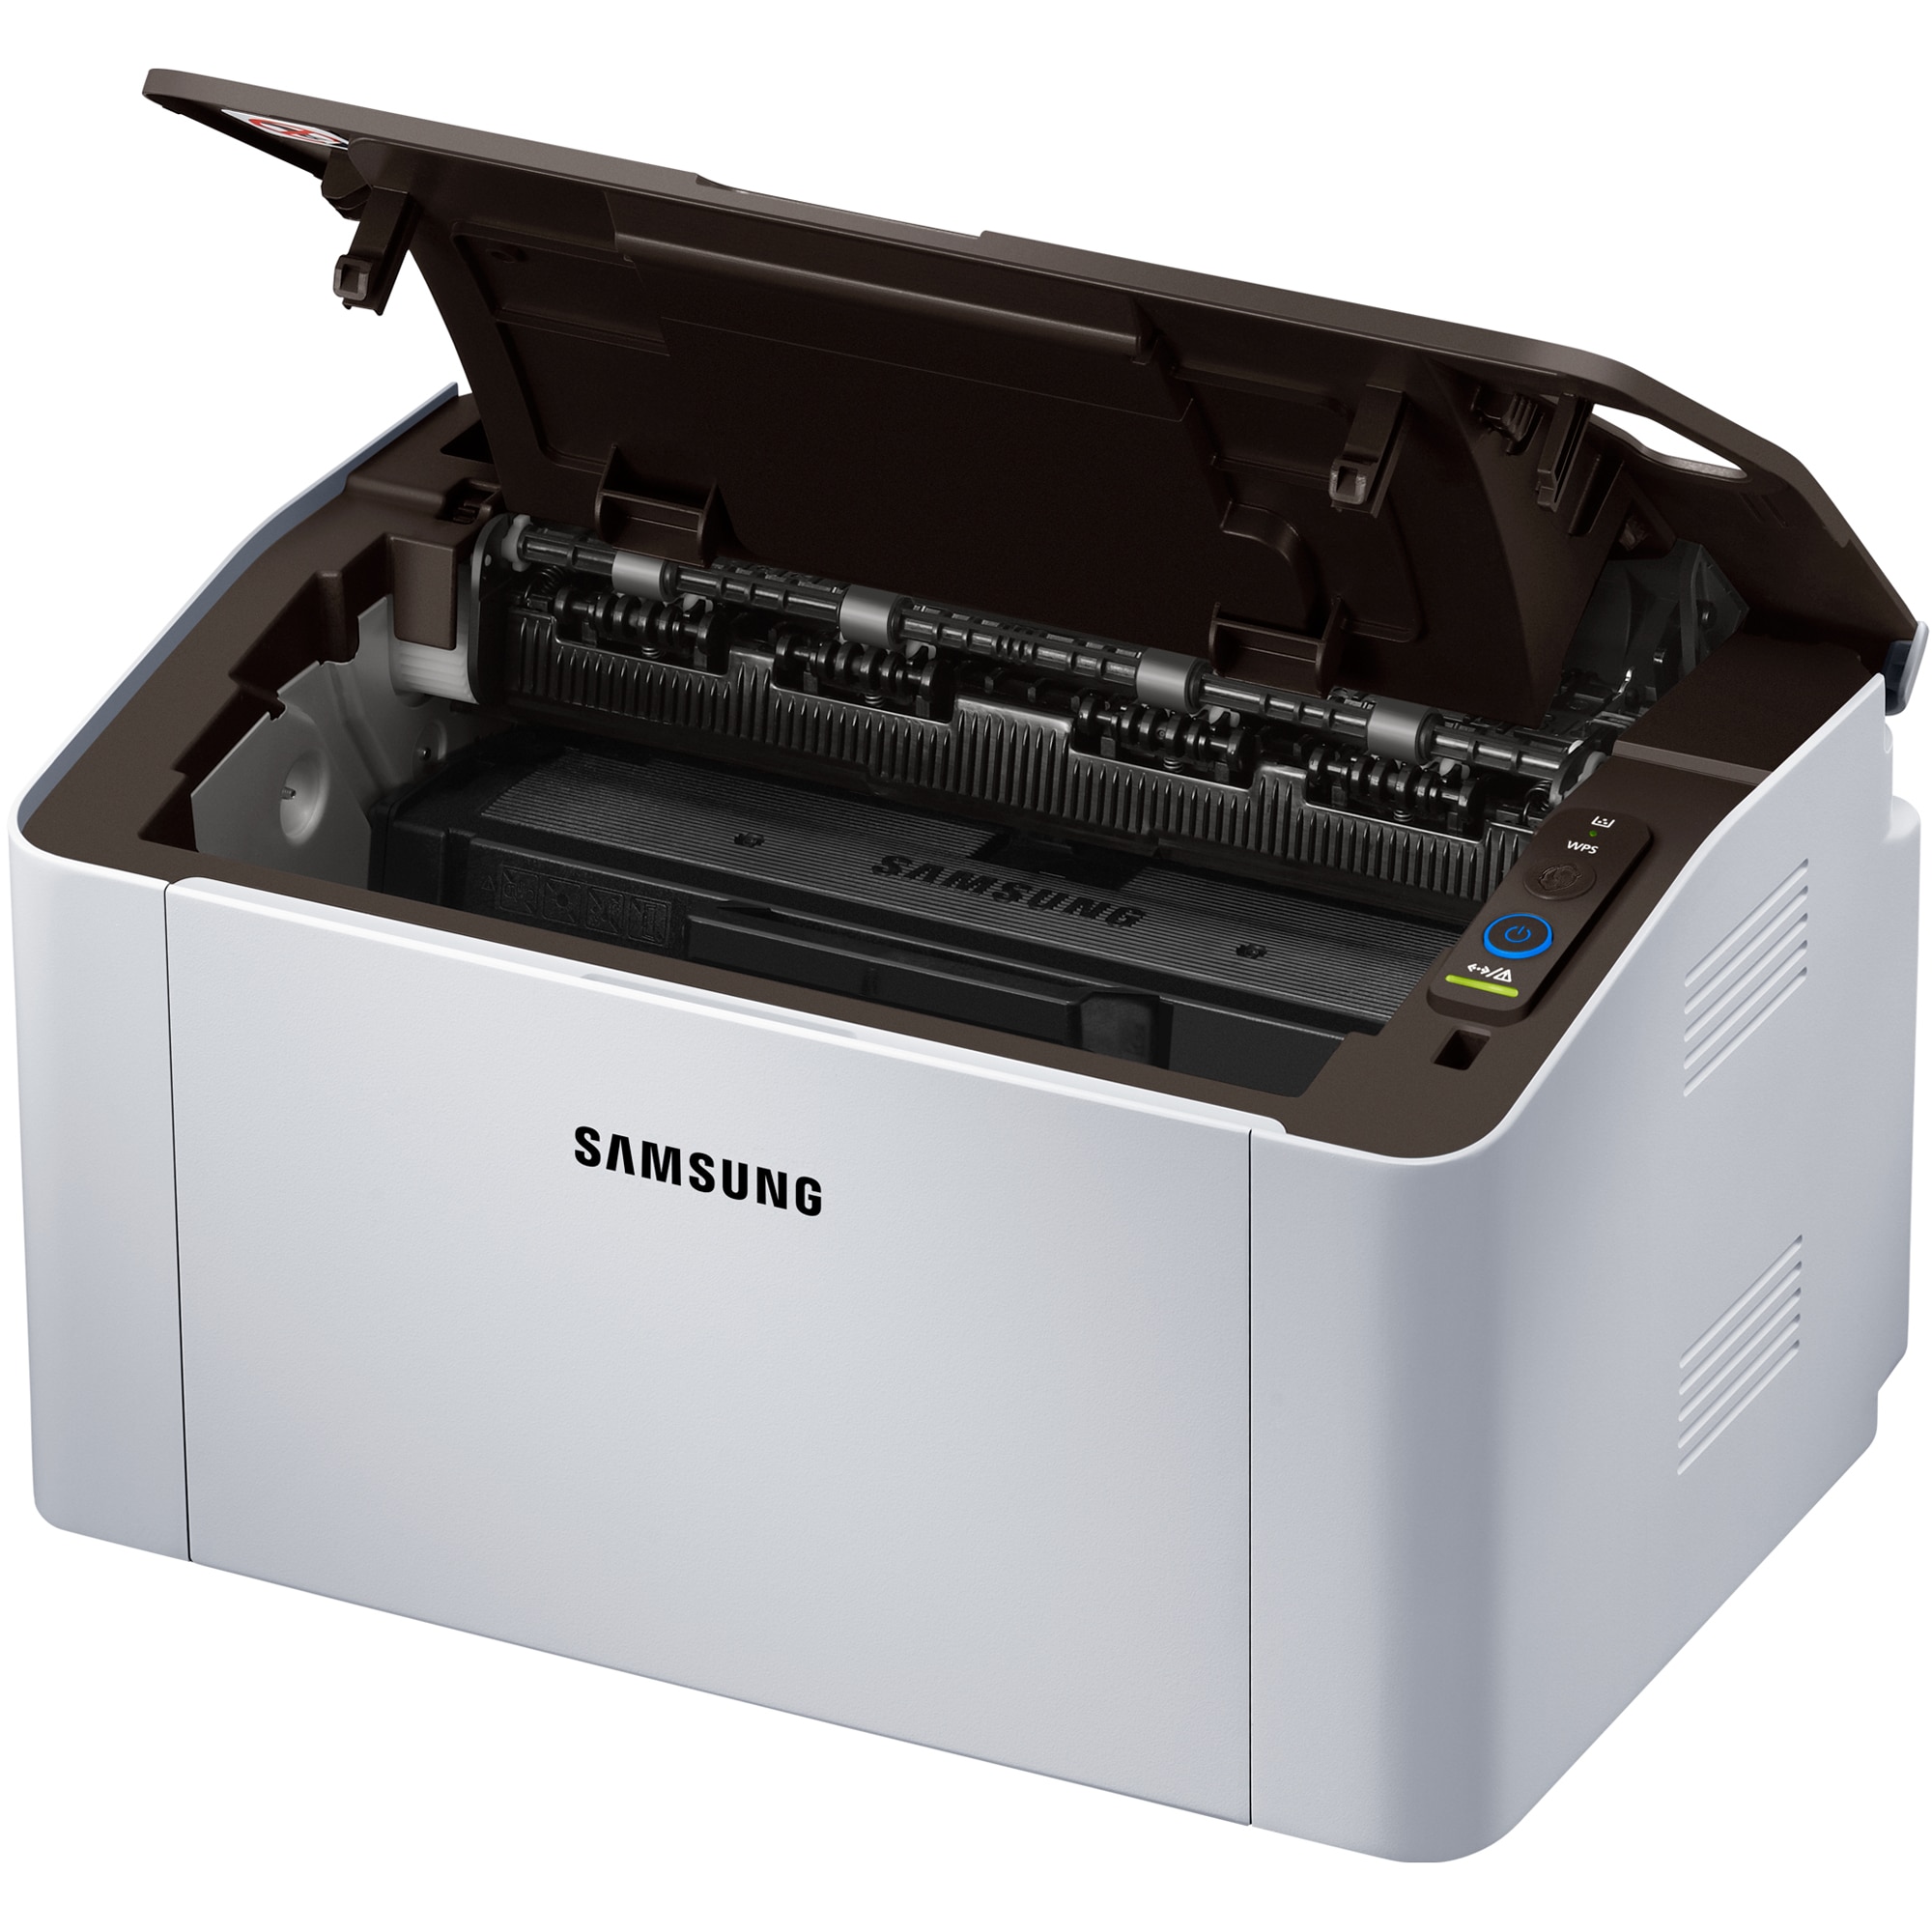 Samsung 2020 купить. Samsung Xpress m2020. Samsung Xpress SL-m2020. Принтер Samsung SL-m2020. Принтер Samsung Xpress m2020.